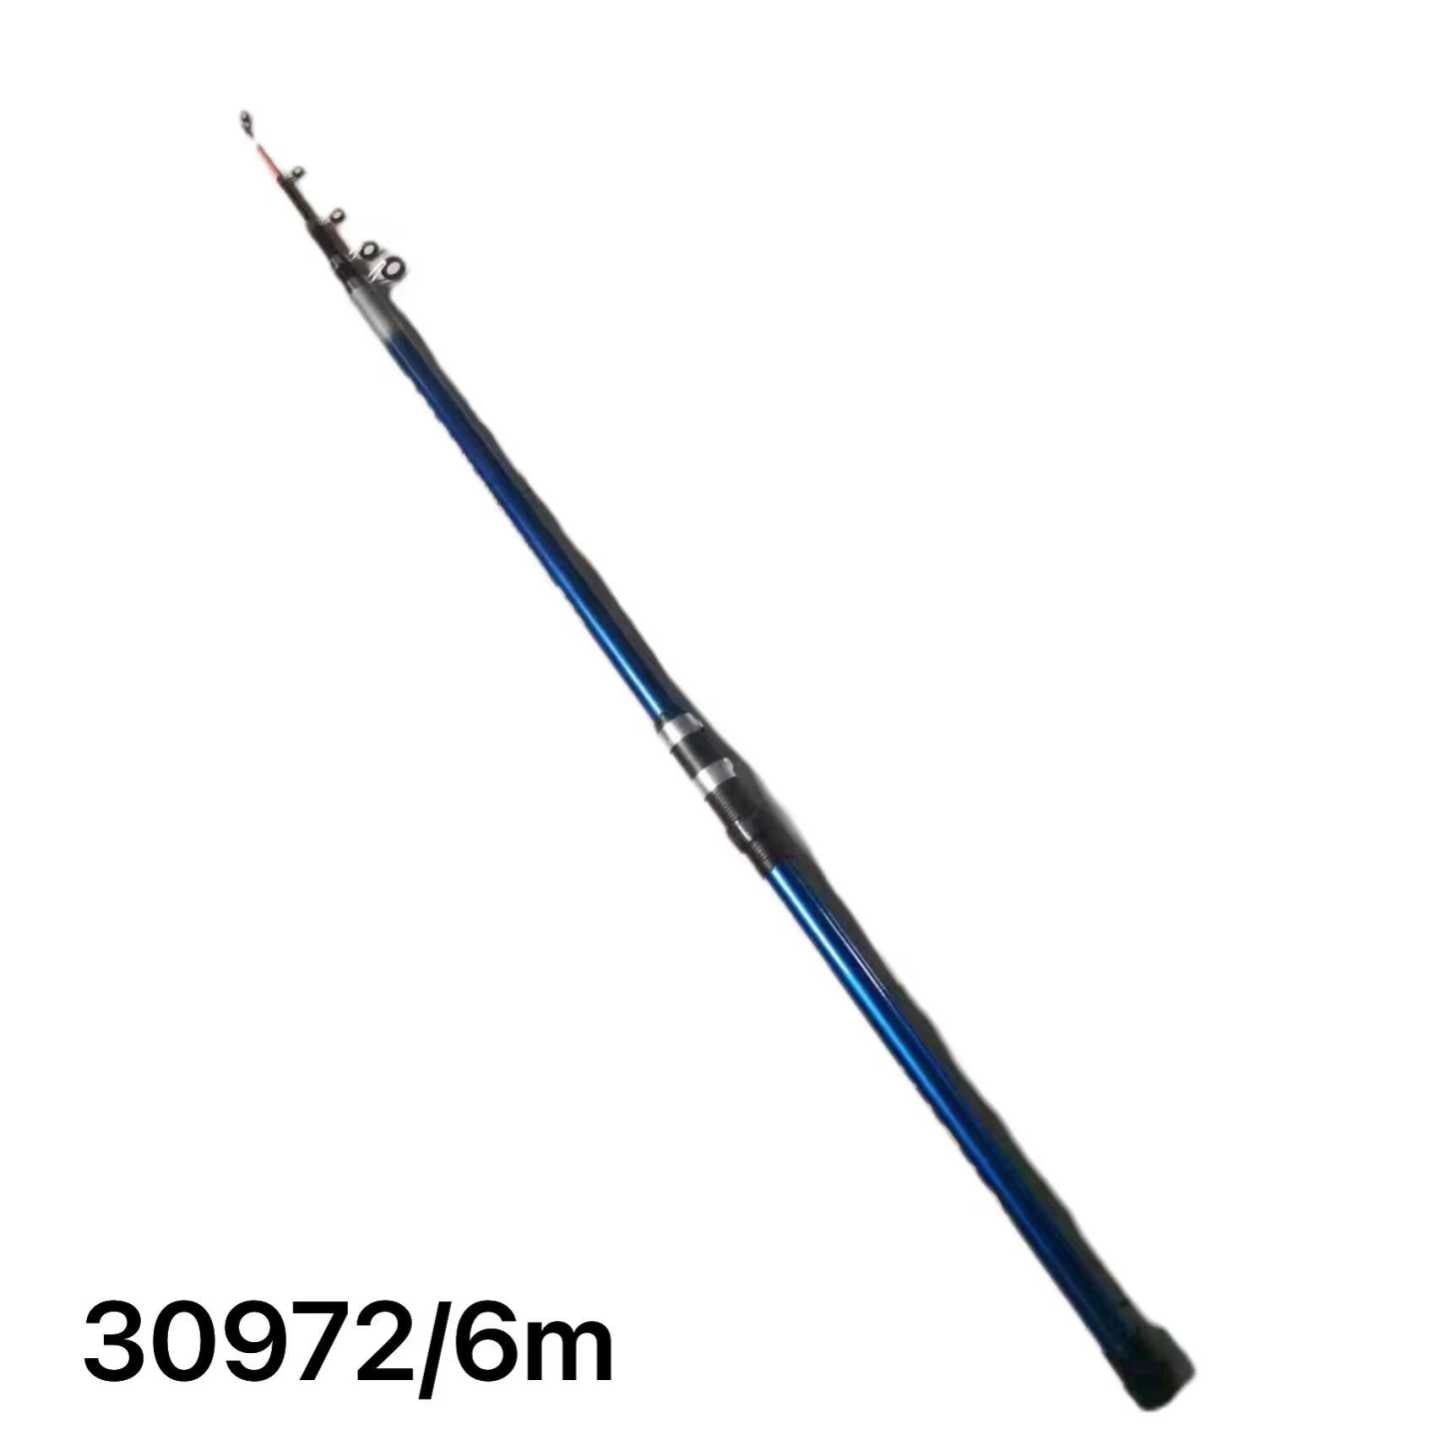 Fishing rod - Telescopic - 30 - 6m - 30972